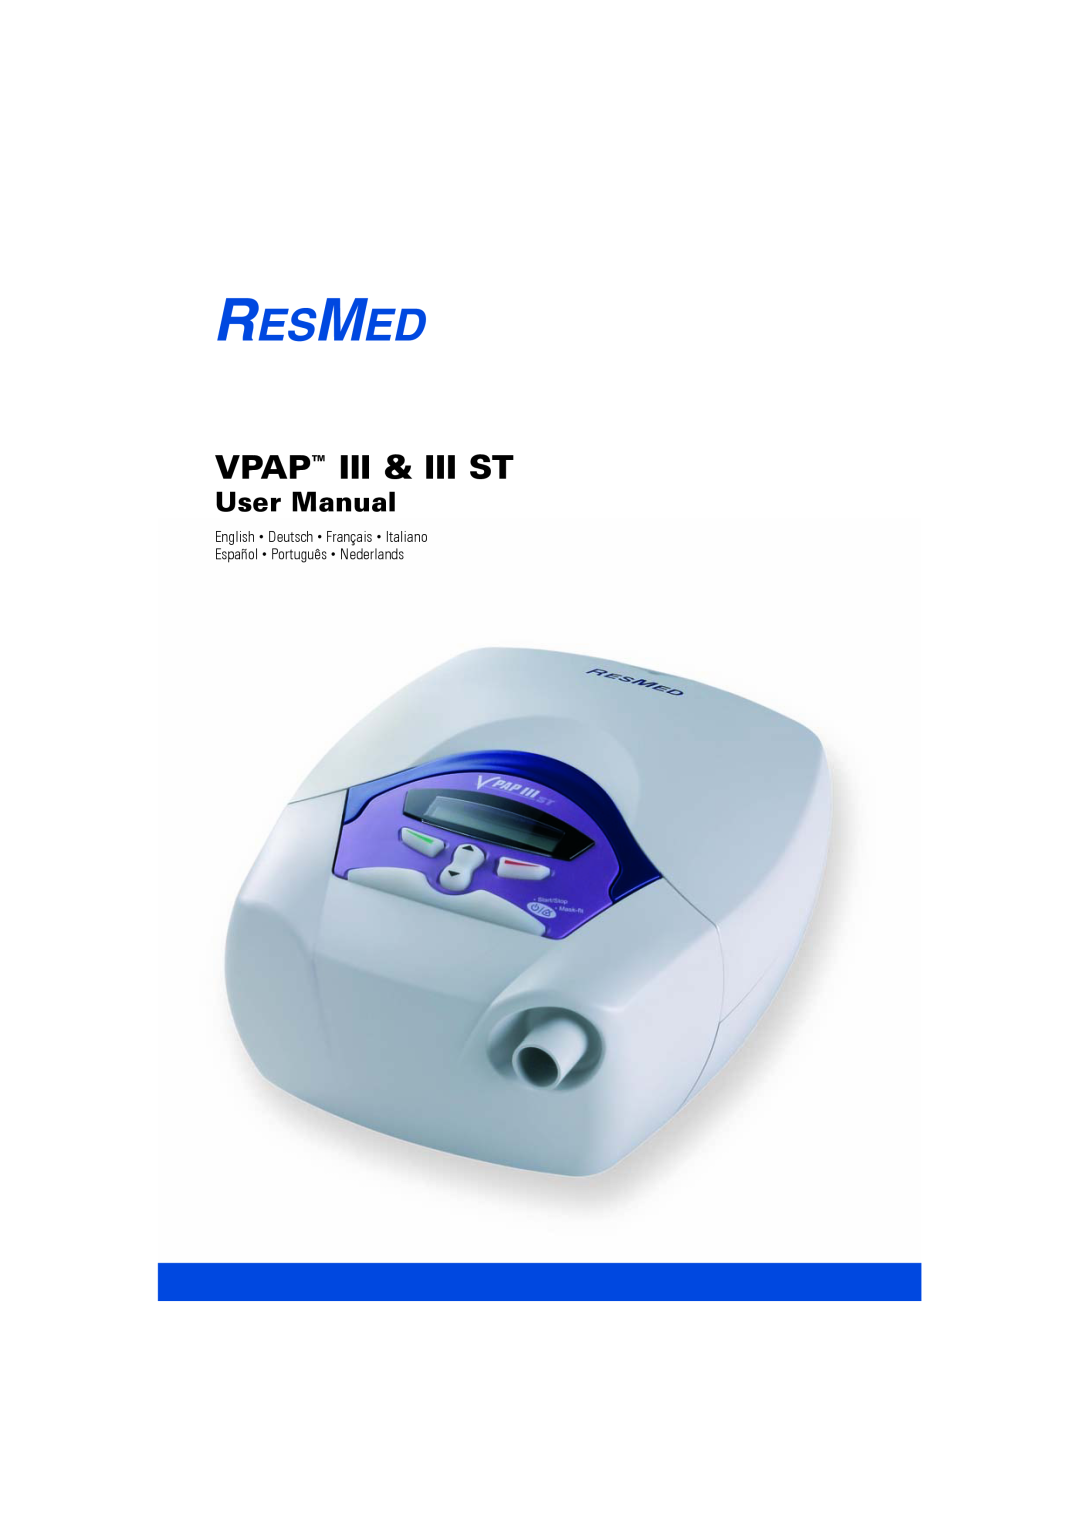 ResMed III & III ST user manual Vpap Iii & Iii St, User Manual 